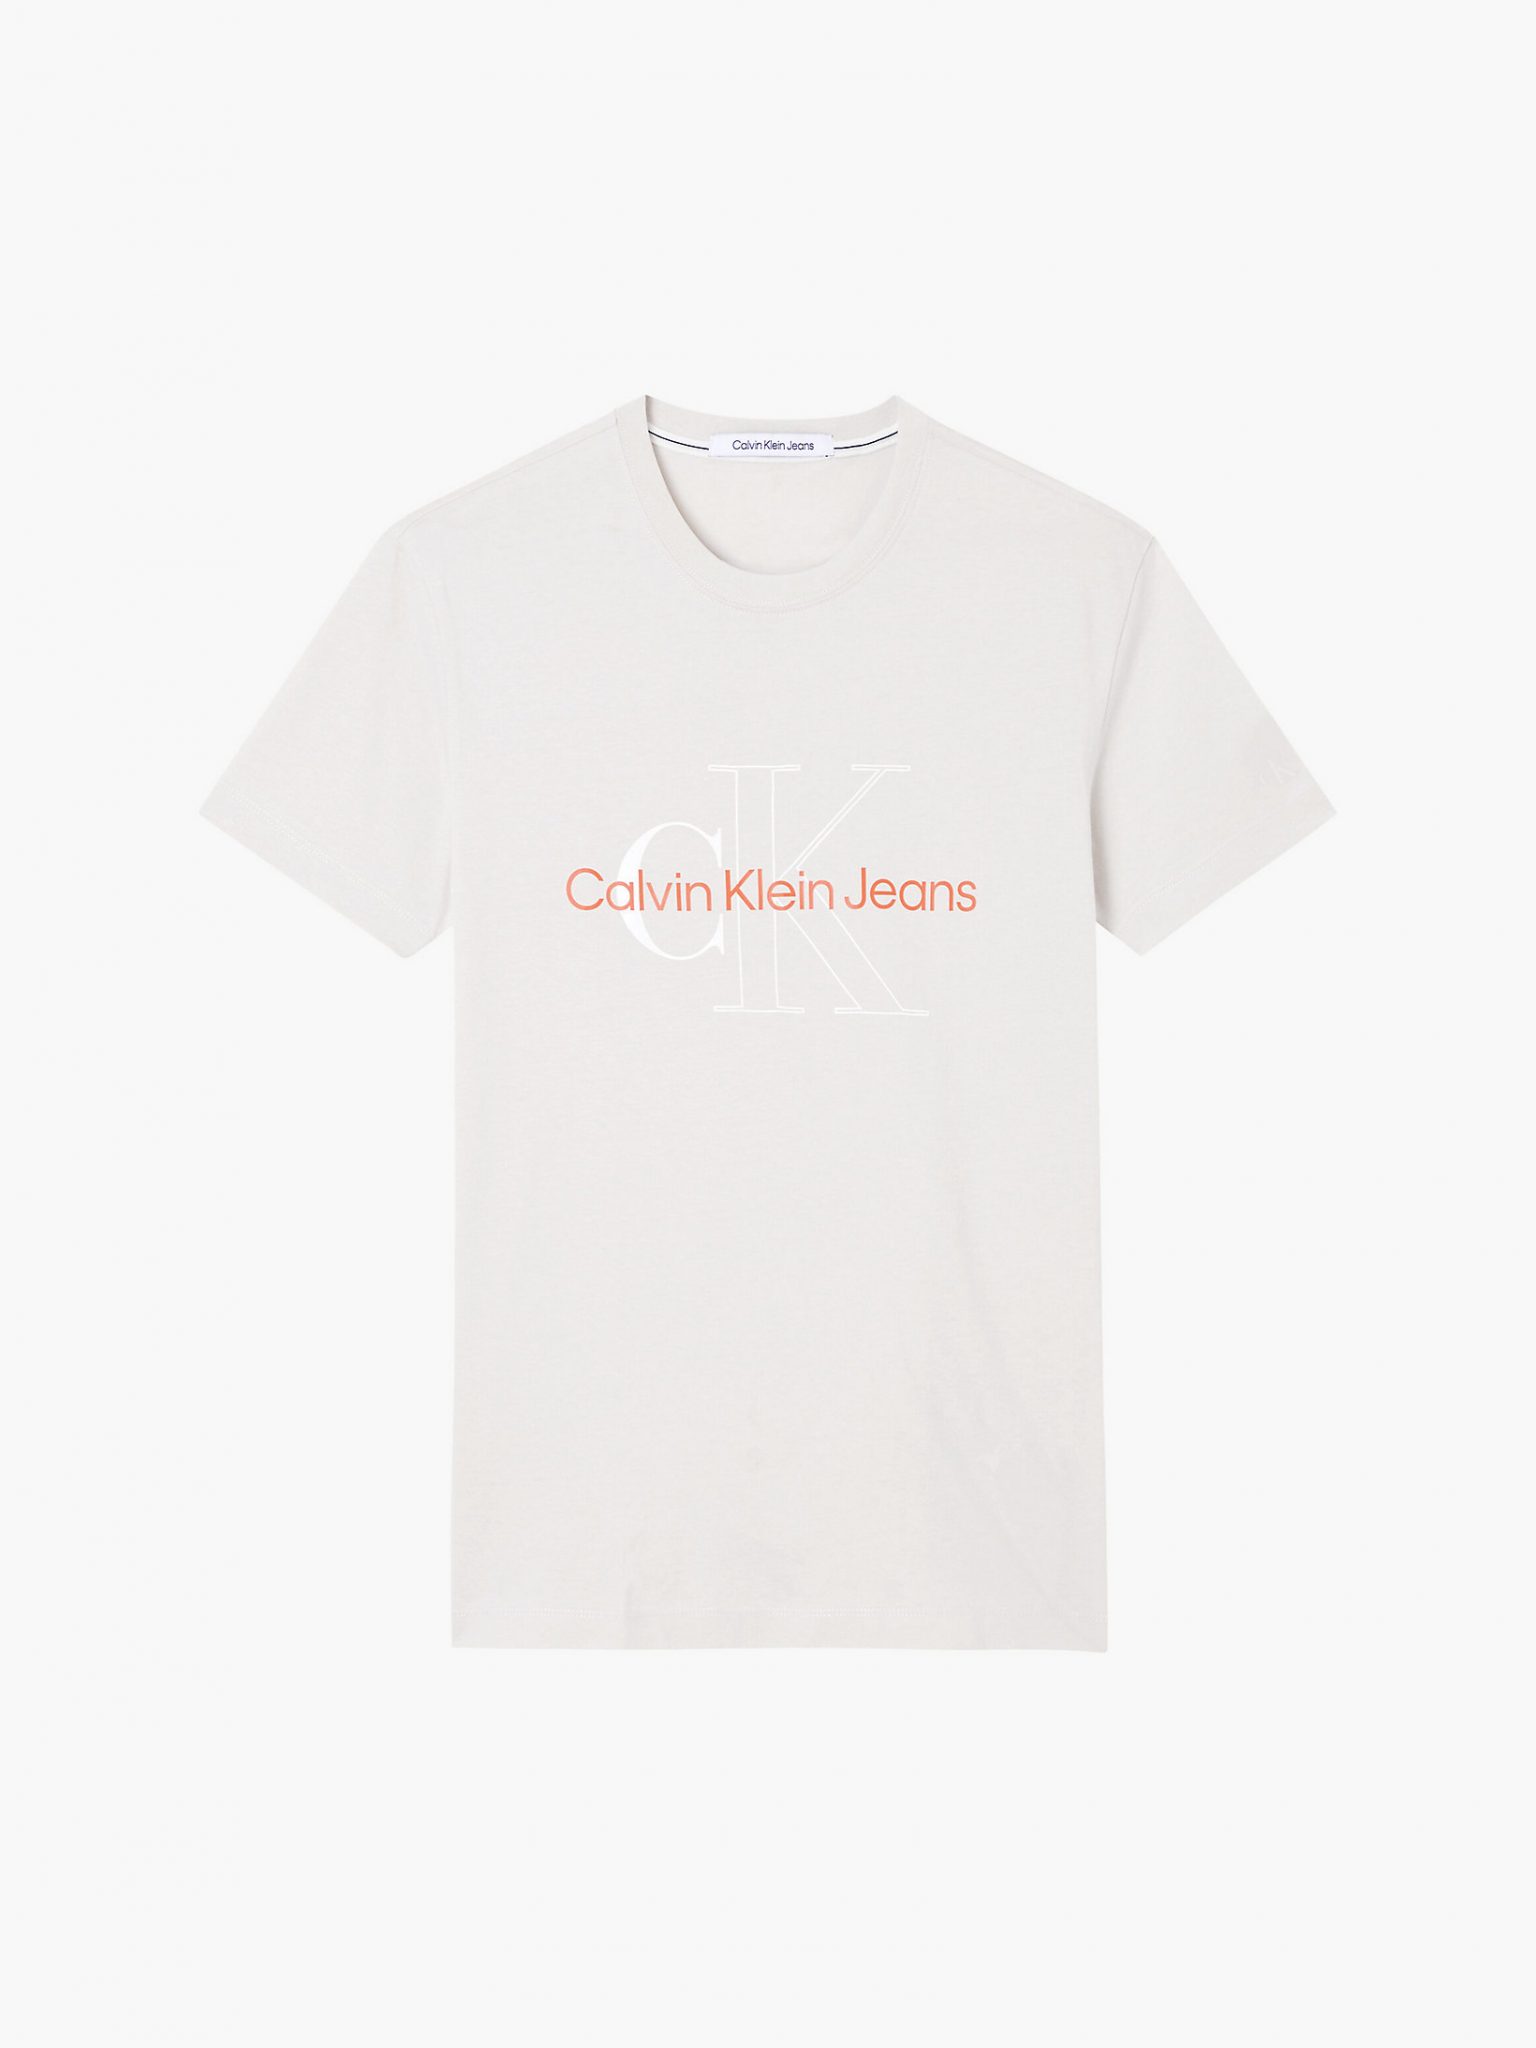 Calvin Klein Jeans - Scandinavian Fashion Store